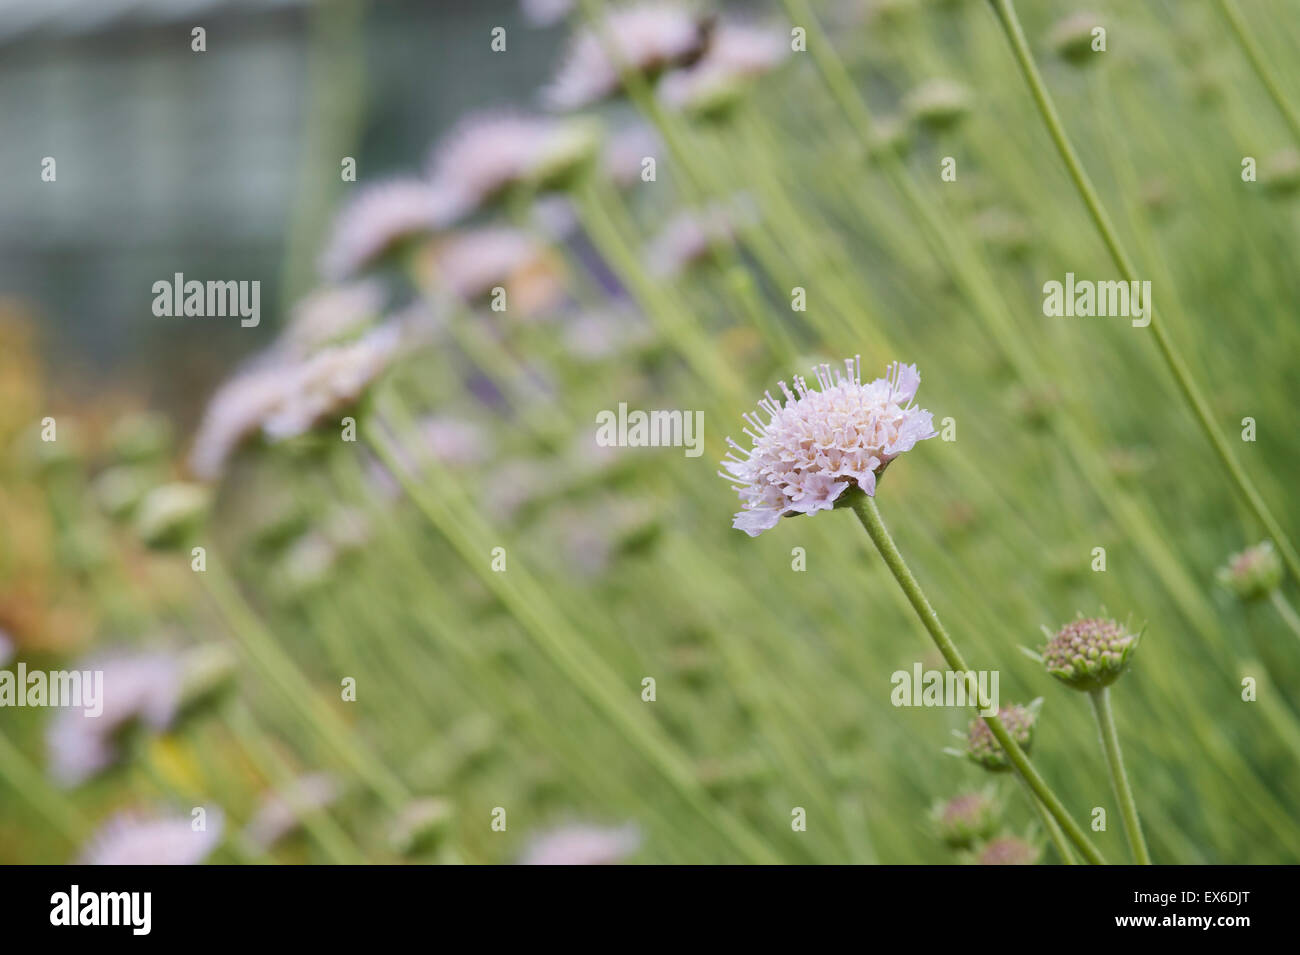 Scabiosa graminifolia. Grass leaved scabious flowers Stock Photo